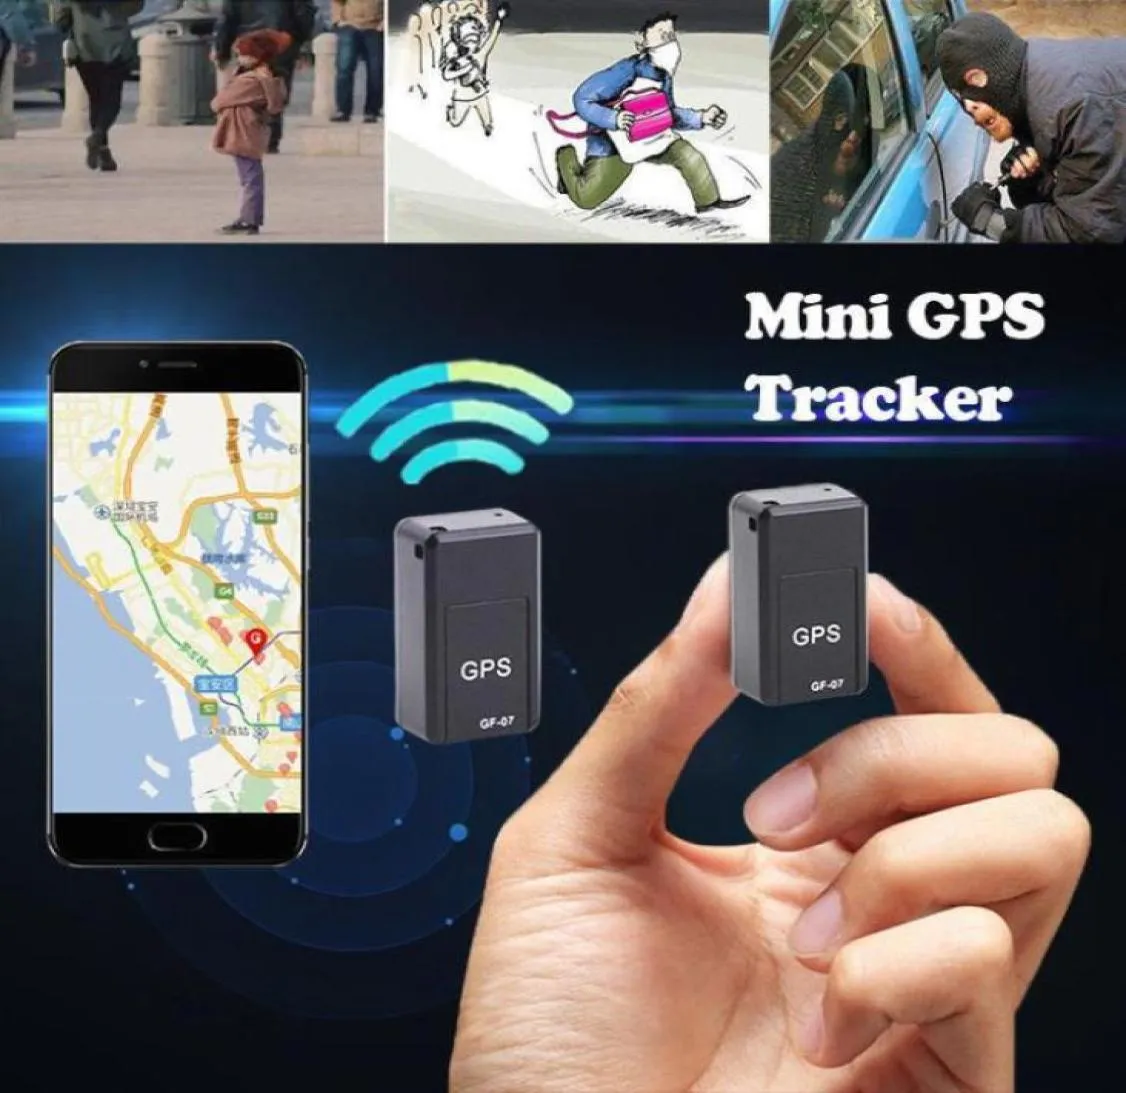 Mini GPS Tracker CAR LONG LONGO DESPEPITO DE RATILAMENTO MAGNÉTICO PARA CARPERSON LOCALIDADE GPS Locator System98169631480310